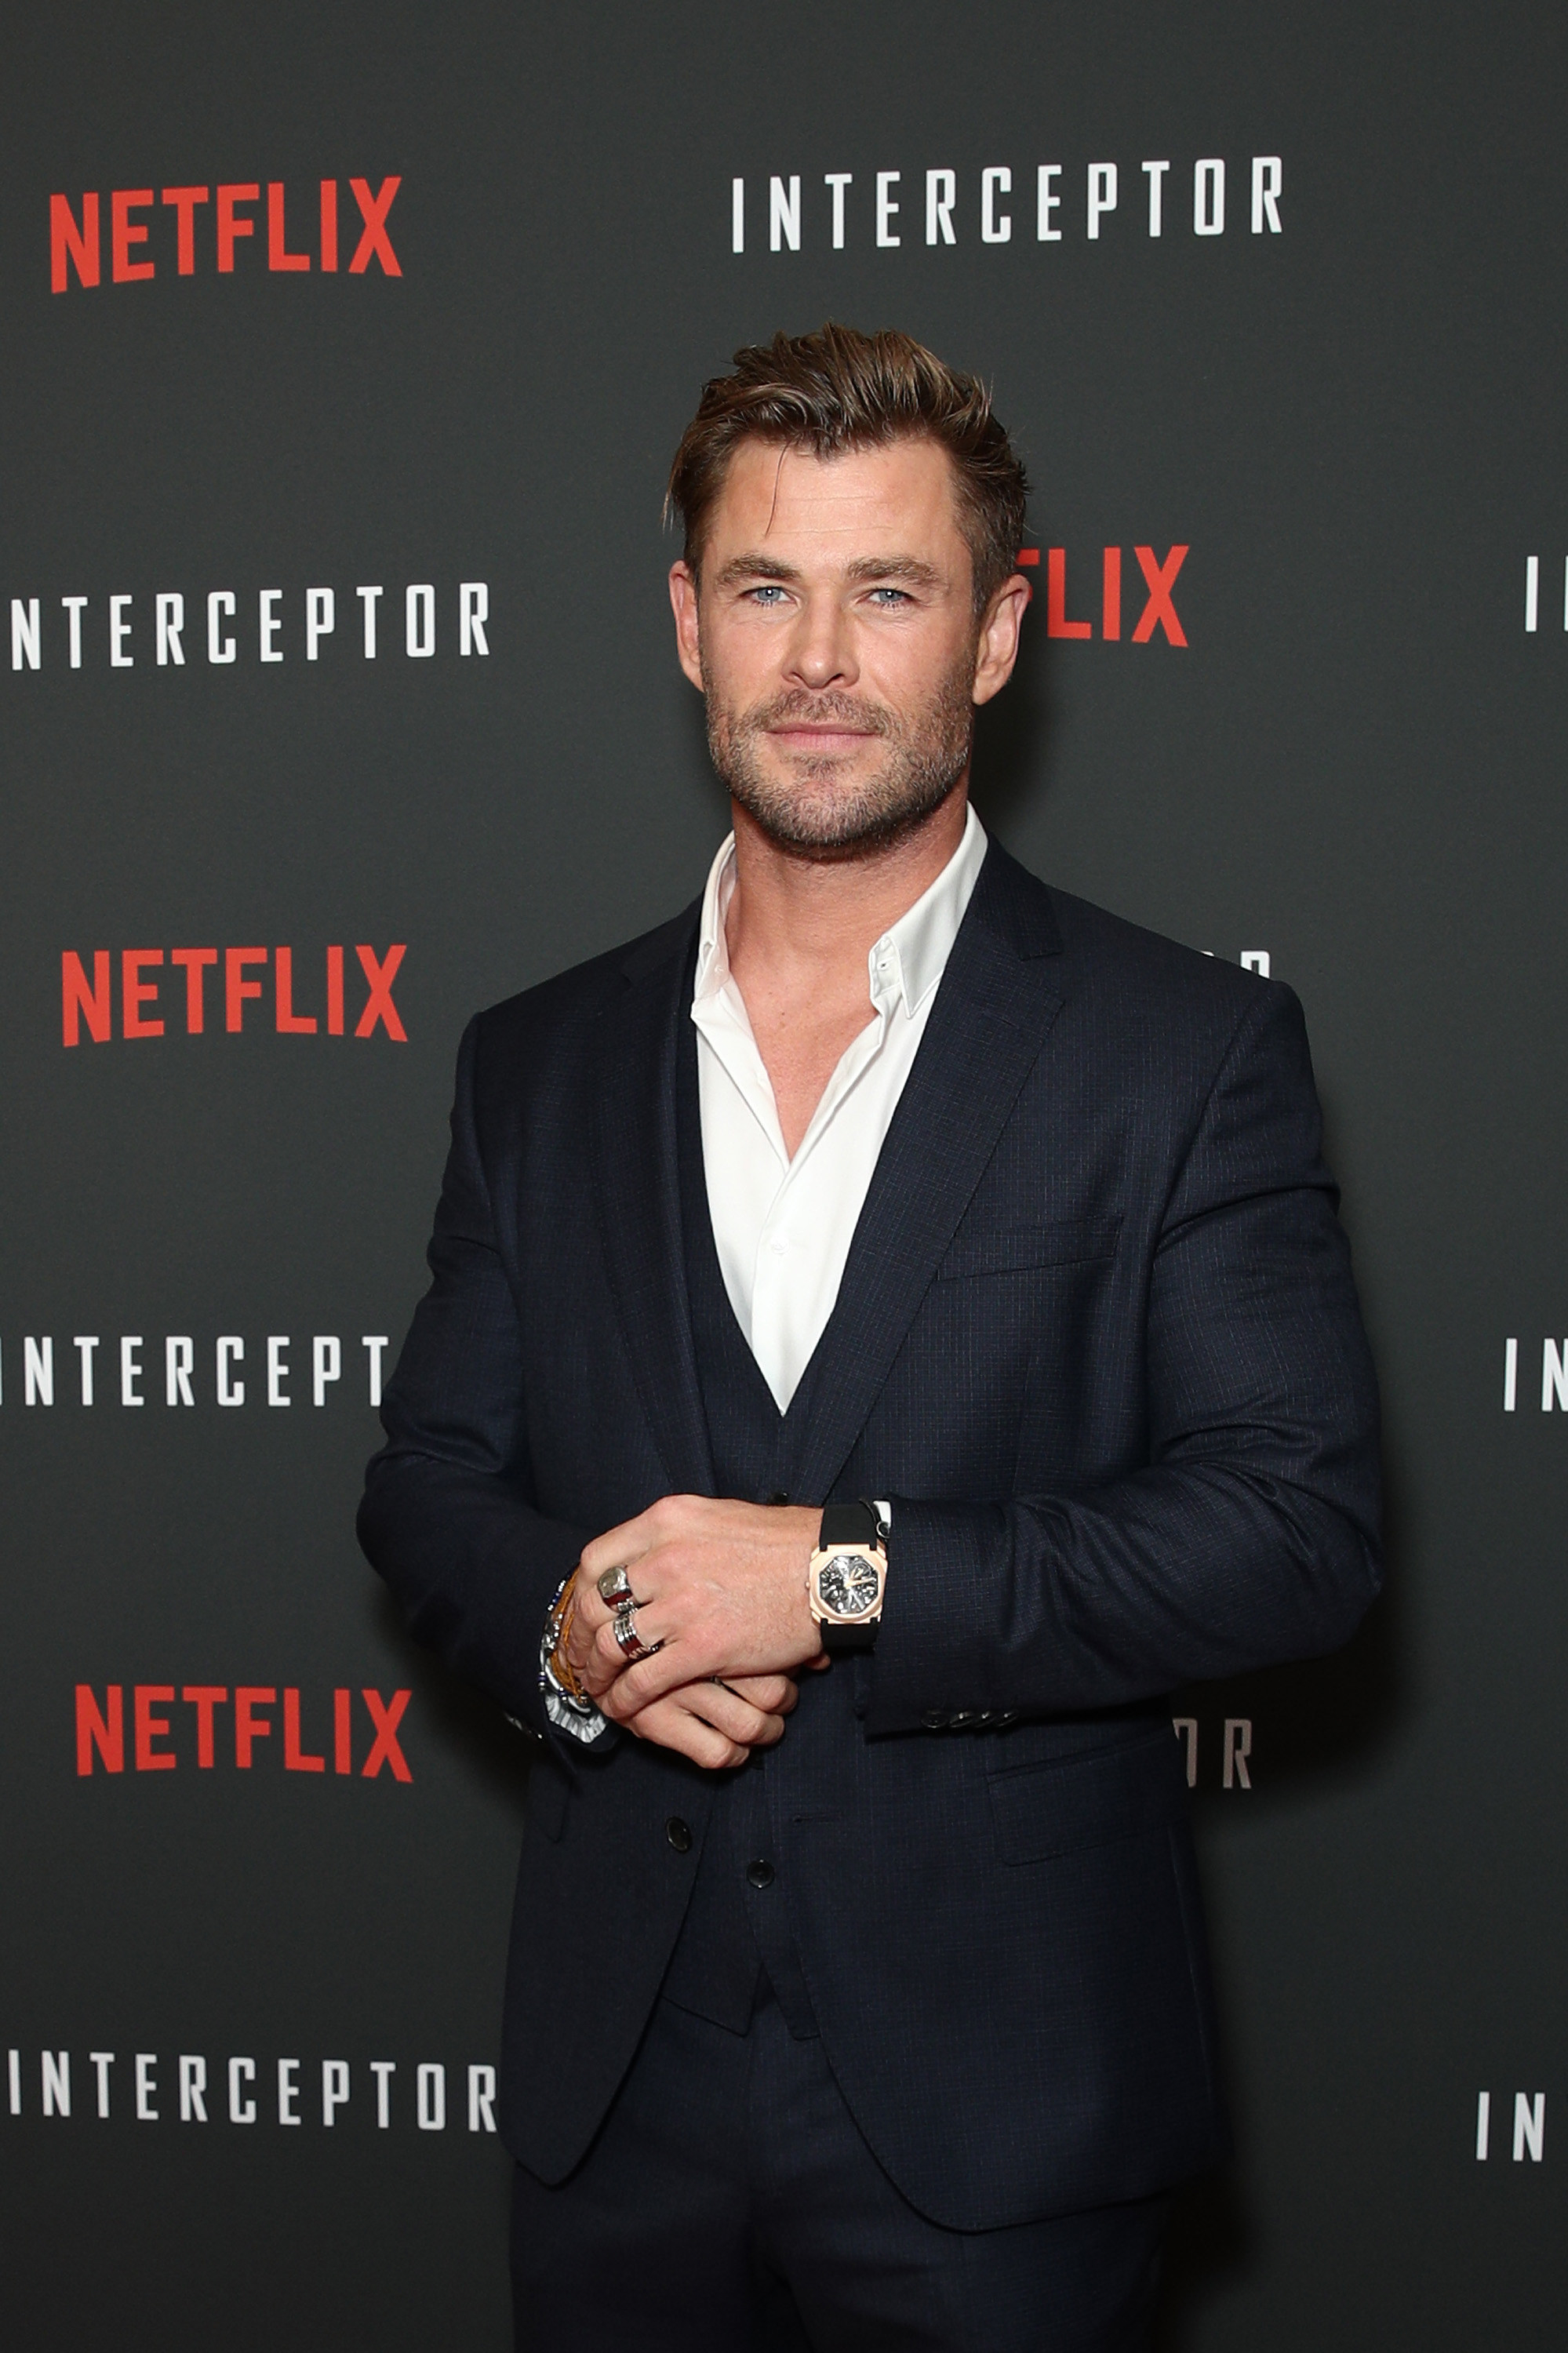 Chris Hemsworth at red carpet screening, in suit